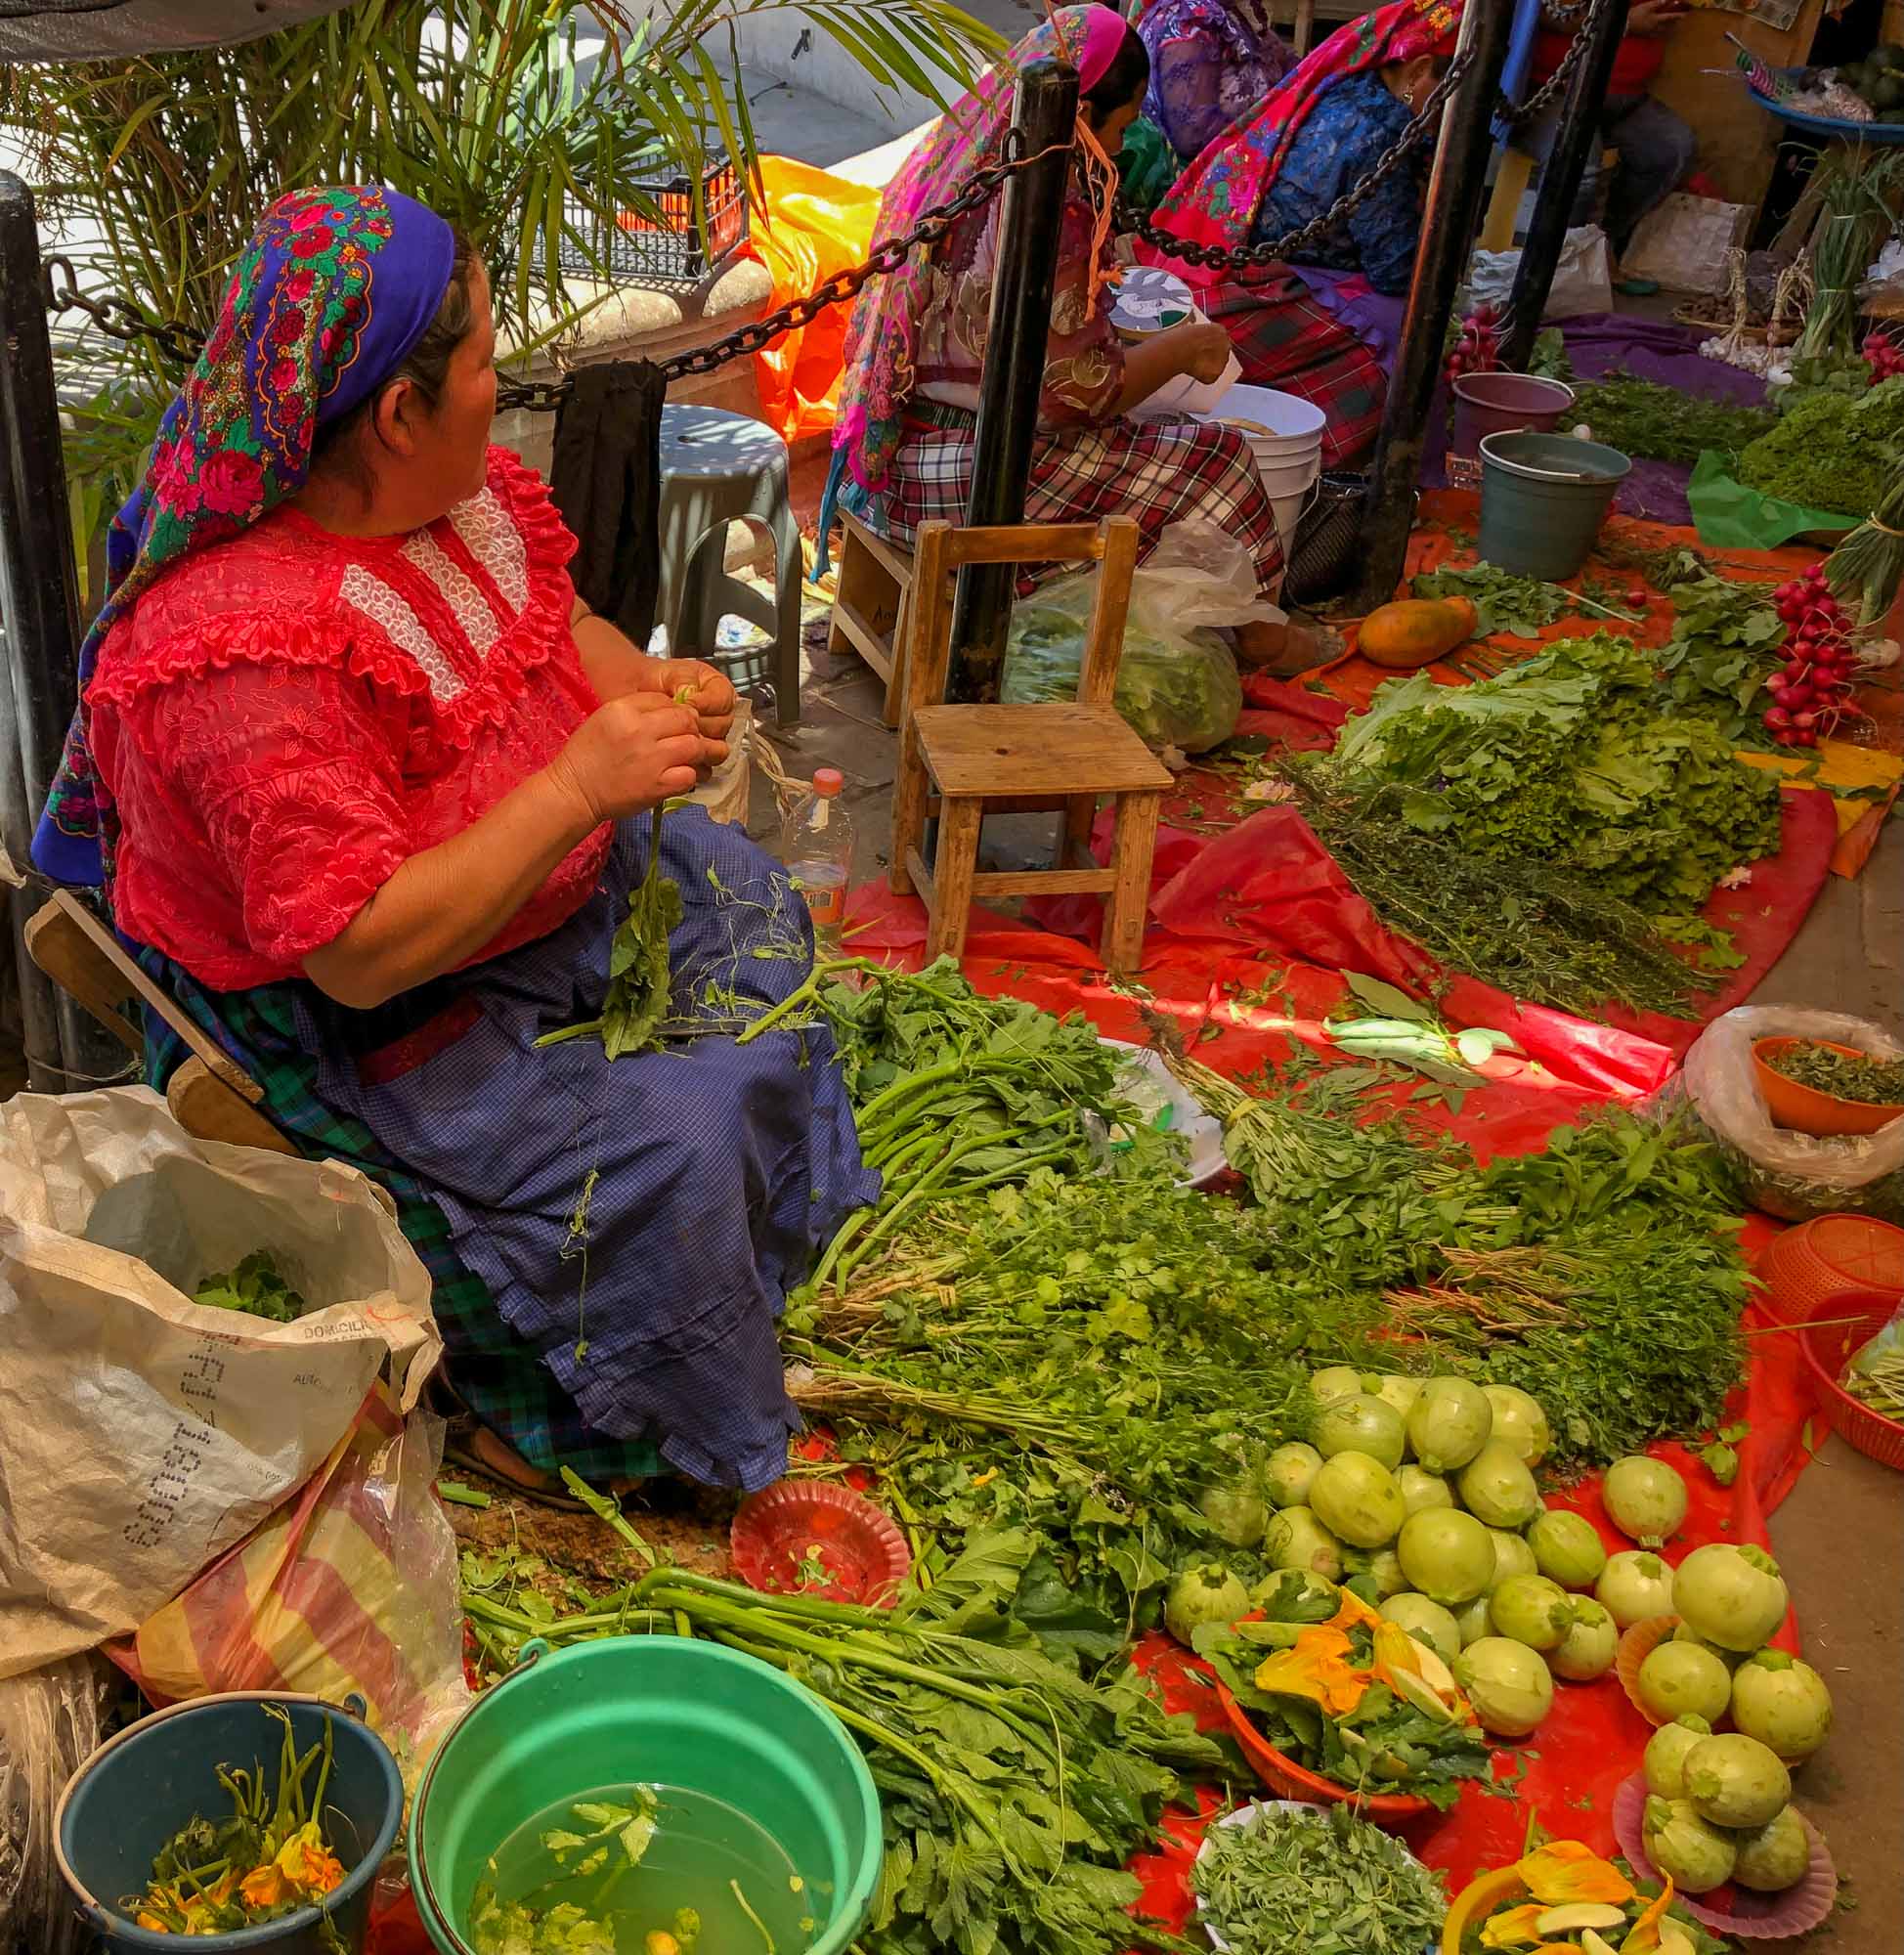 Tiacolula Market